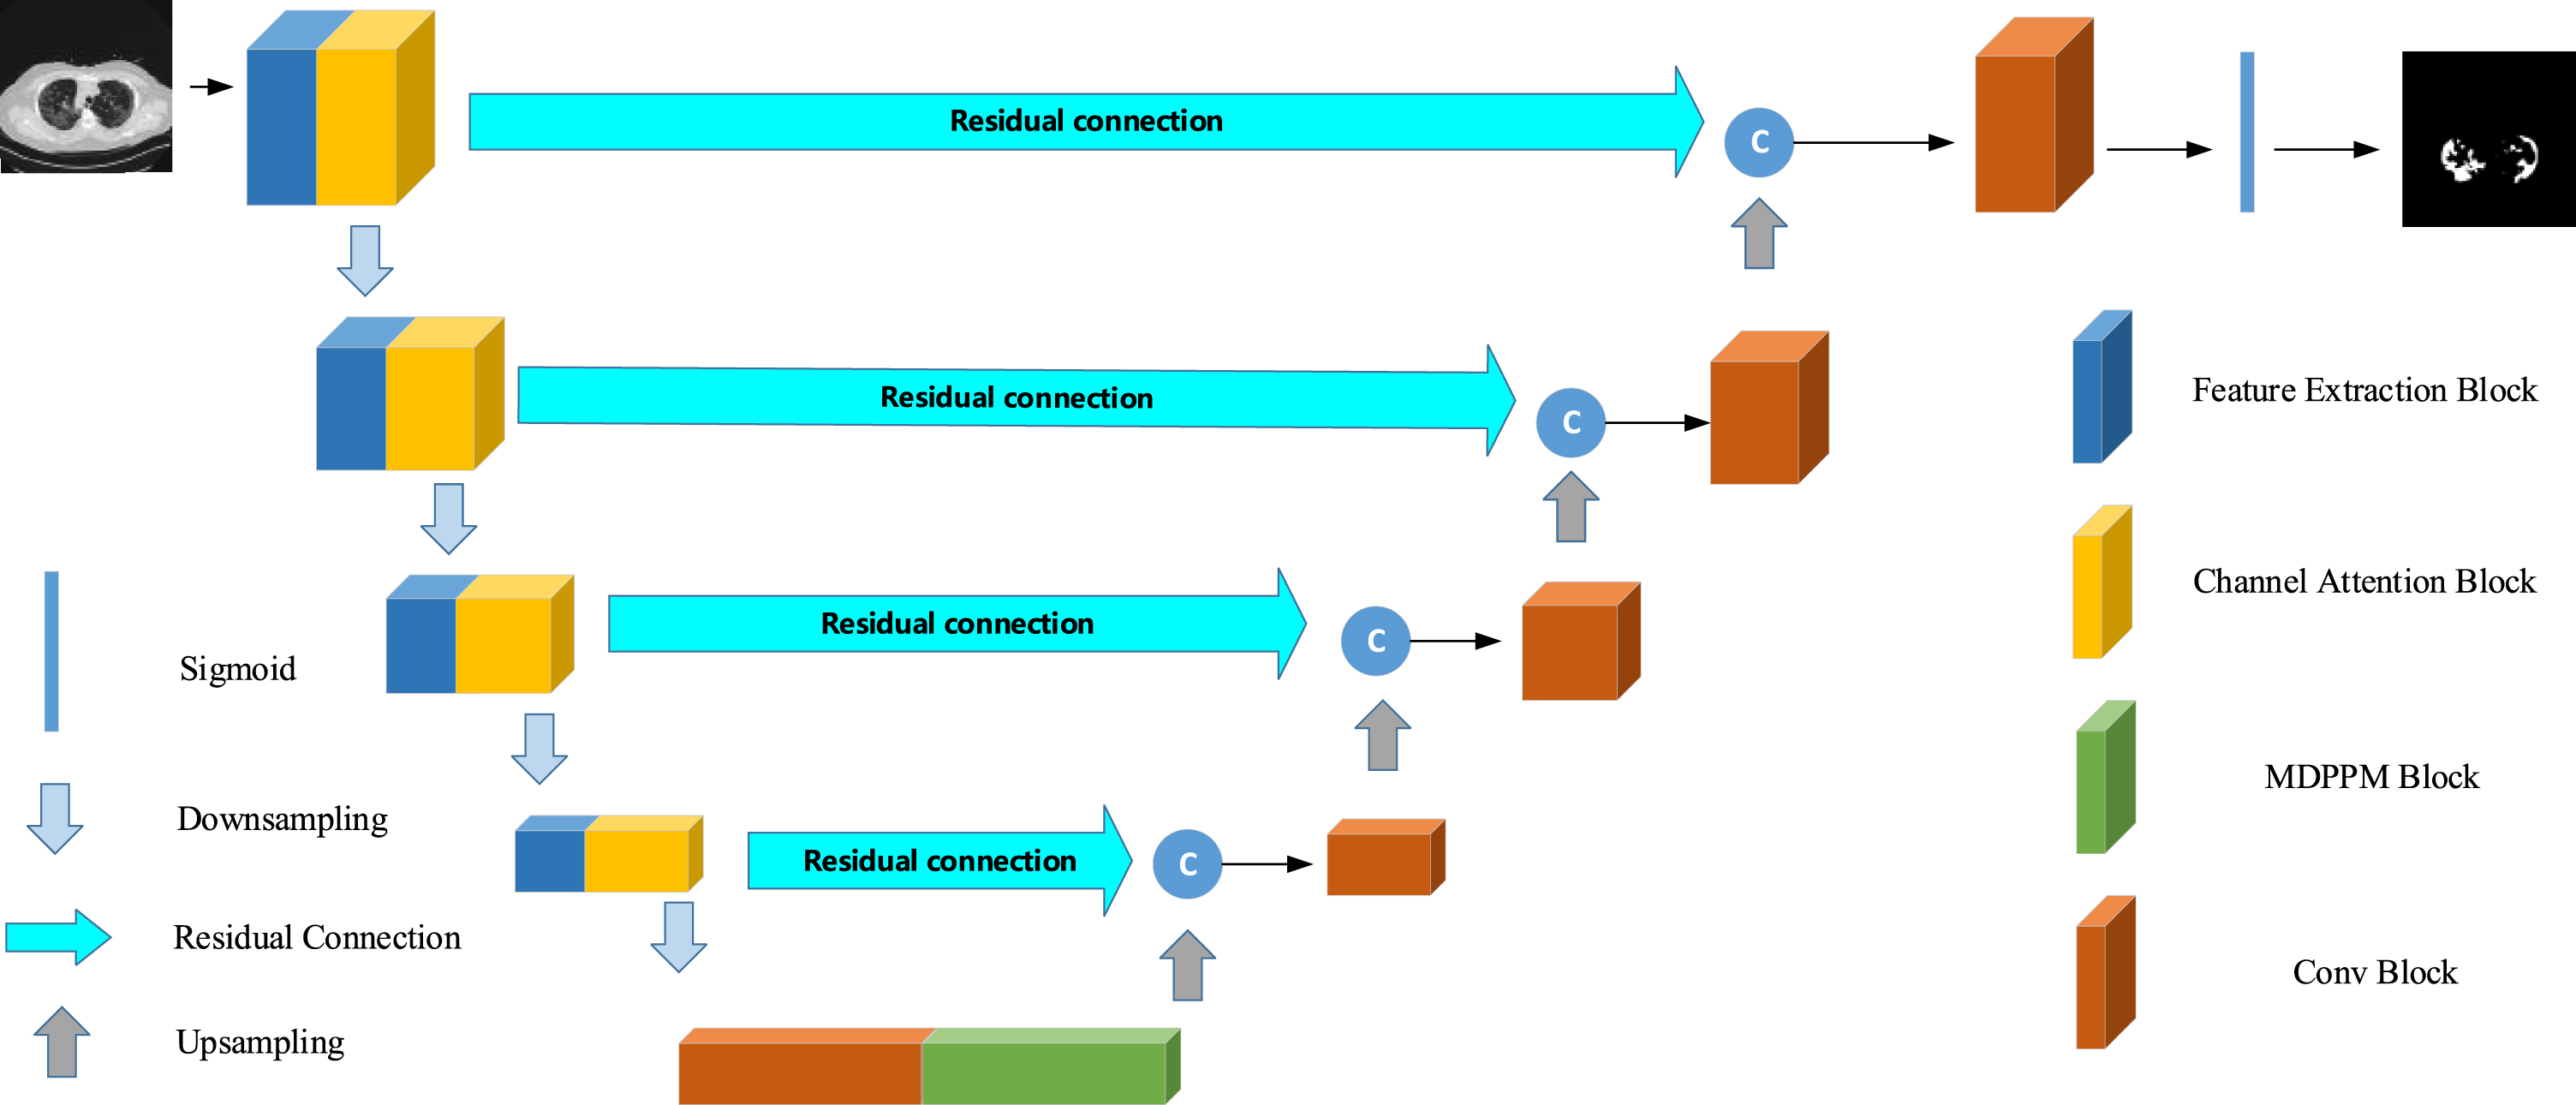 Architecture of the proposed segmentation network.